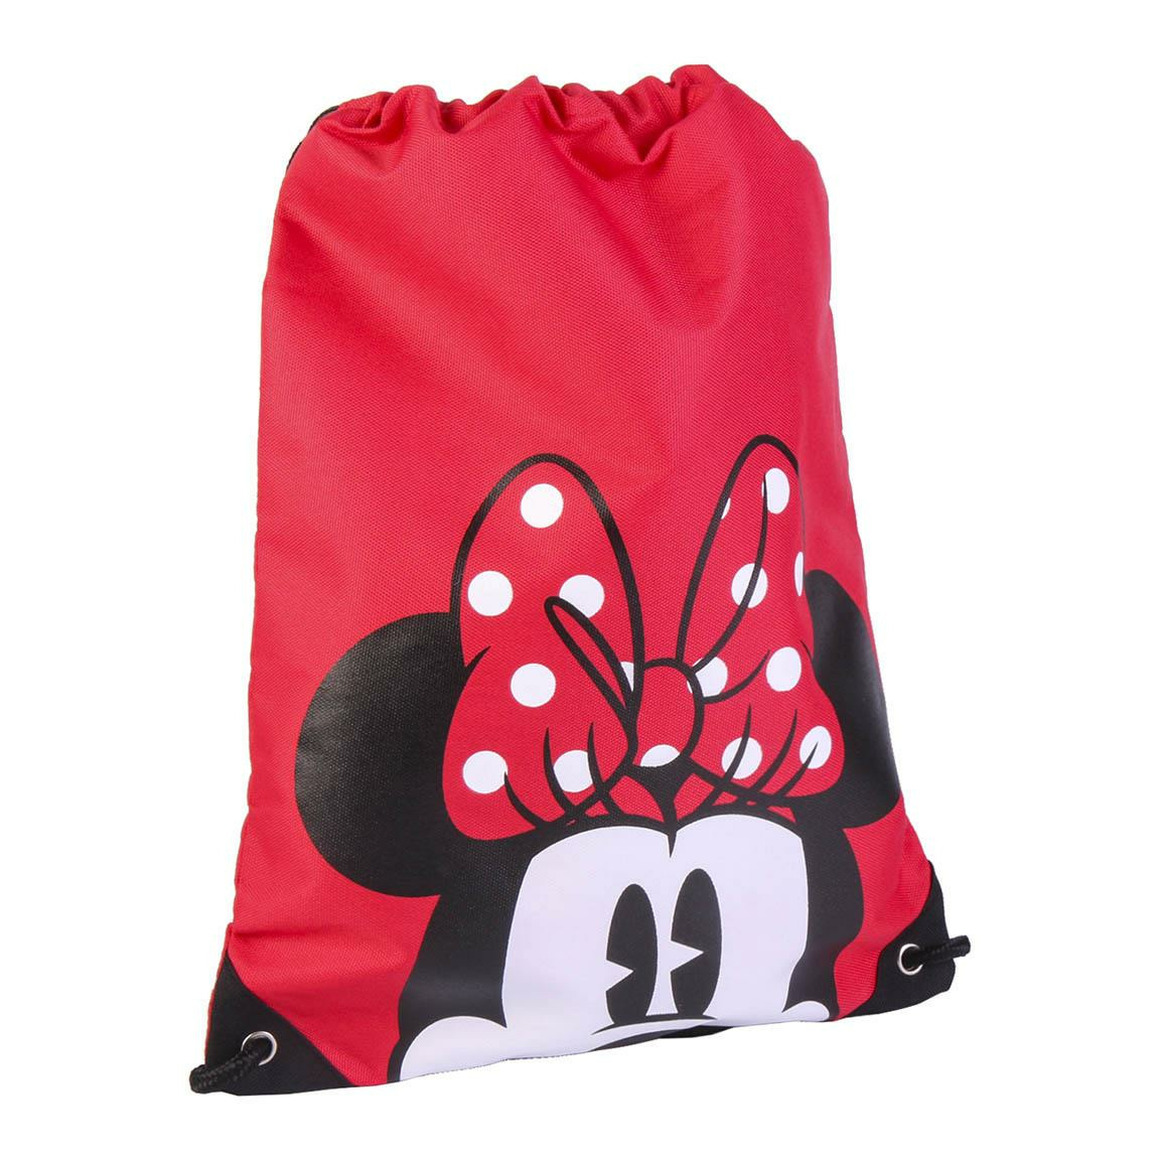 Disney Minnie MouseÂ gymtas-rugzak-rugtas voor kinderen rood polyester 29 x 40 cm